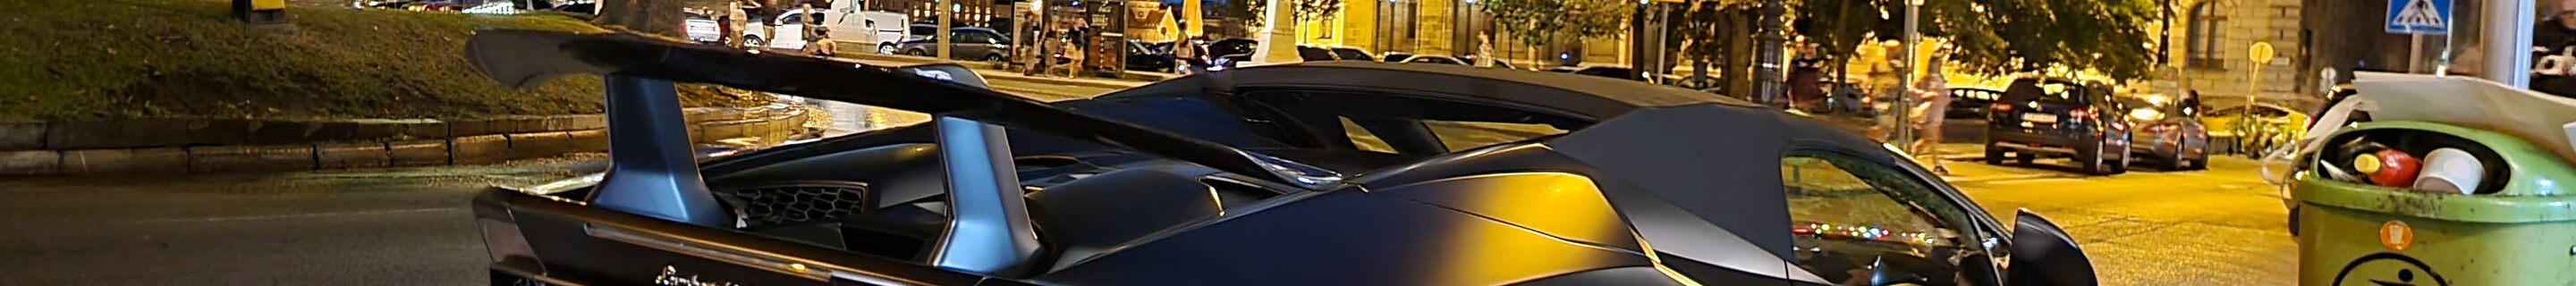 Lamborghini Huracán LP640-4 Performante Spyder